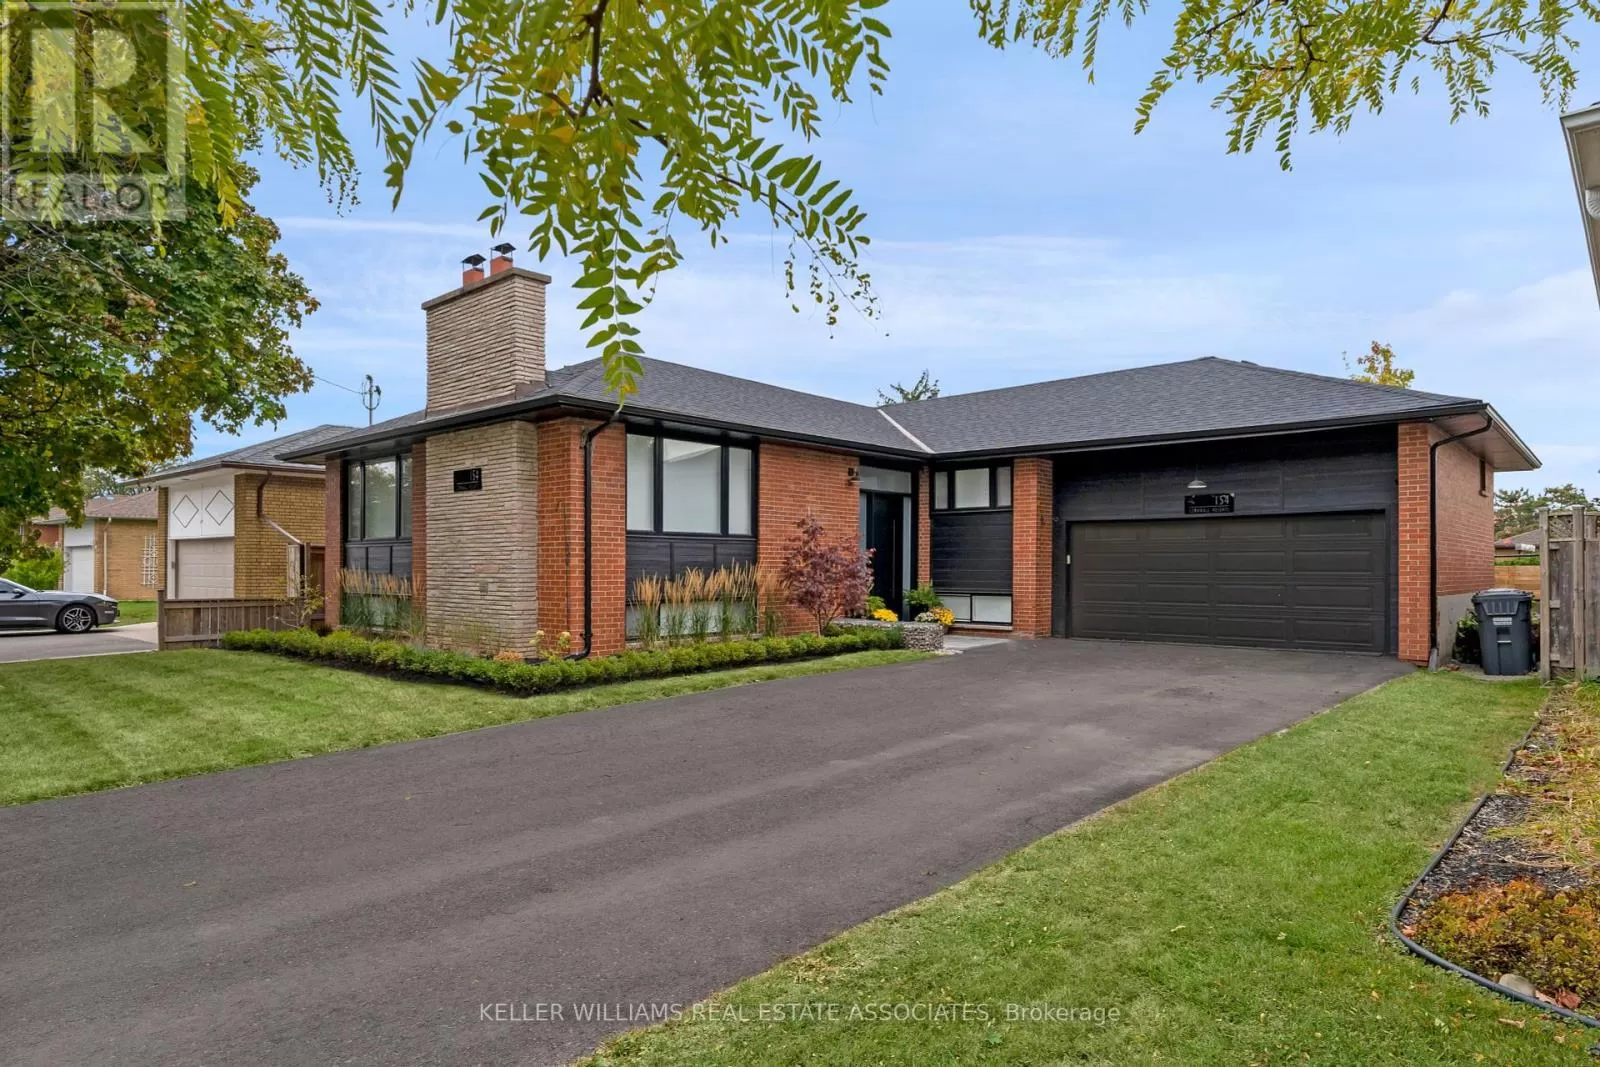 House for rent: 154 Cornwall Hts, Brampton, Ontario L6W 2J2